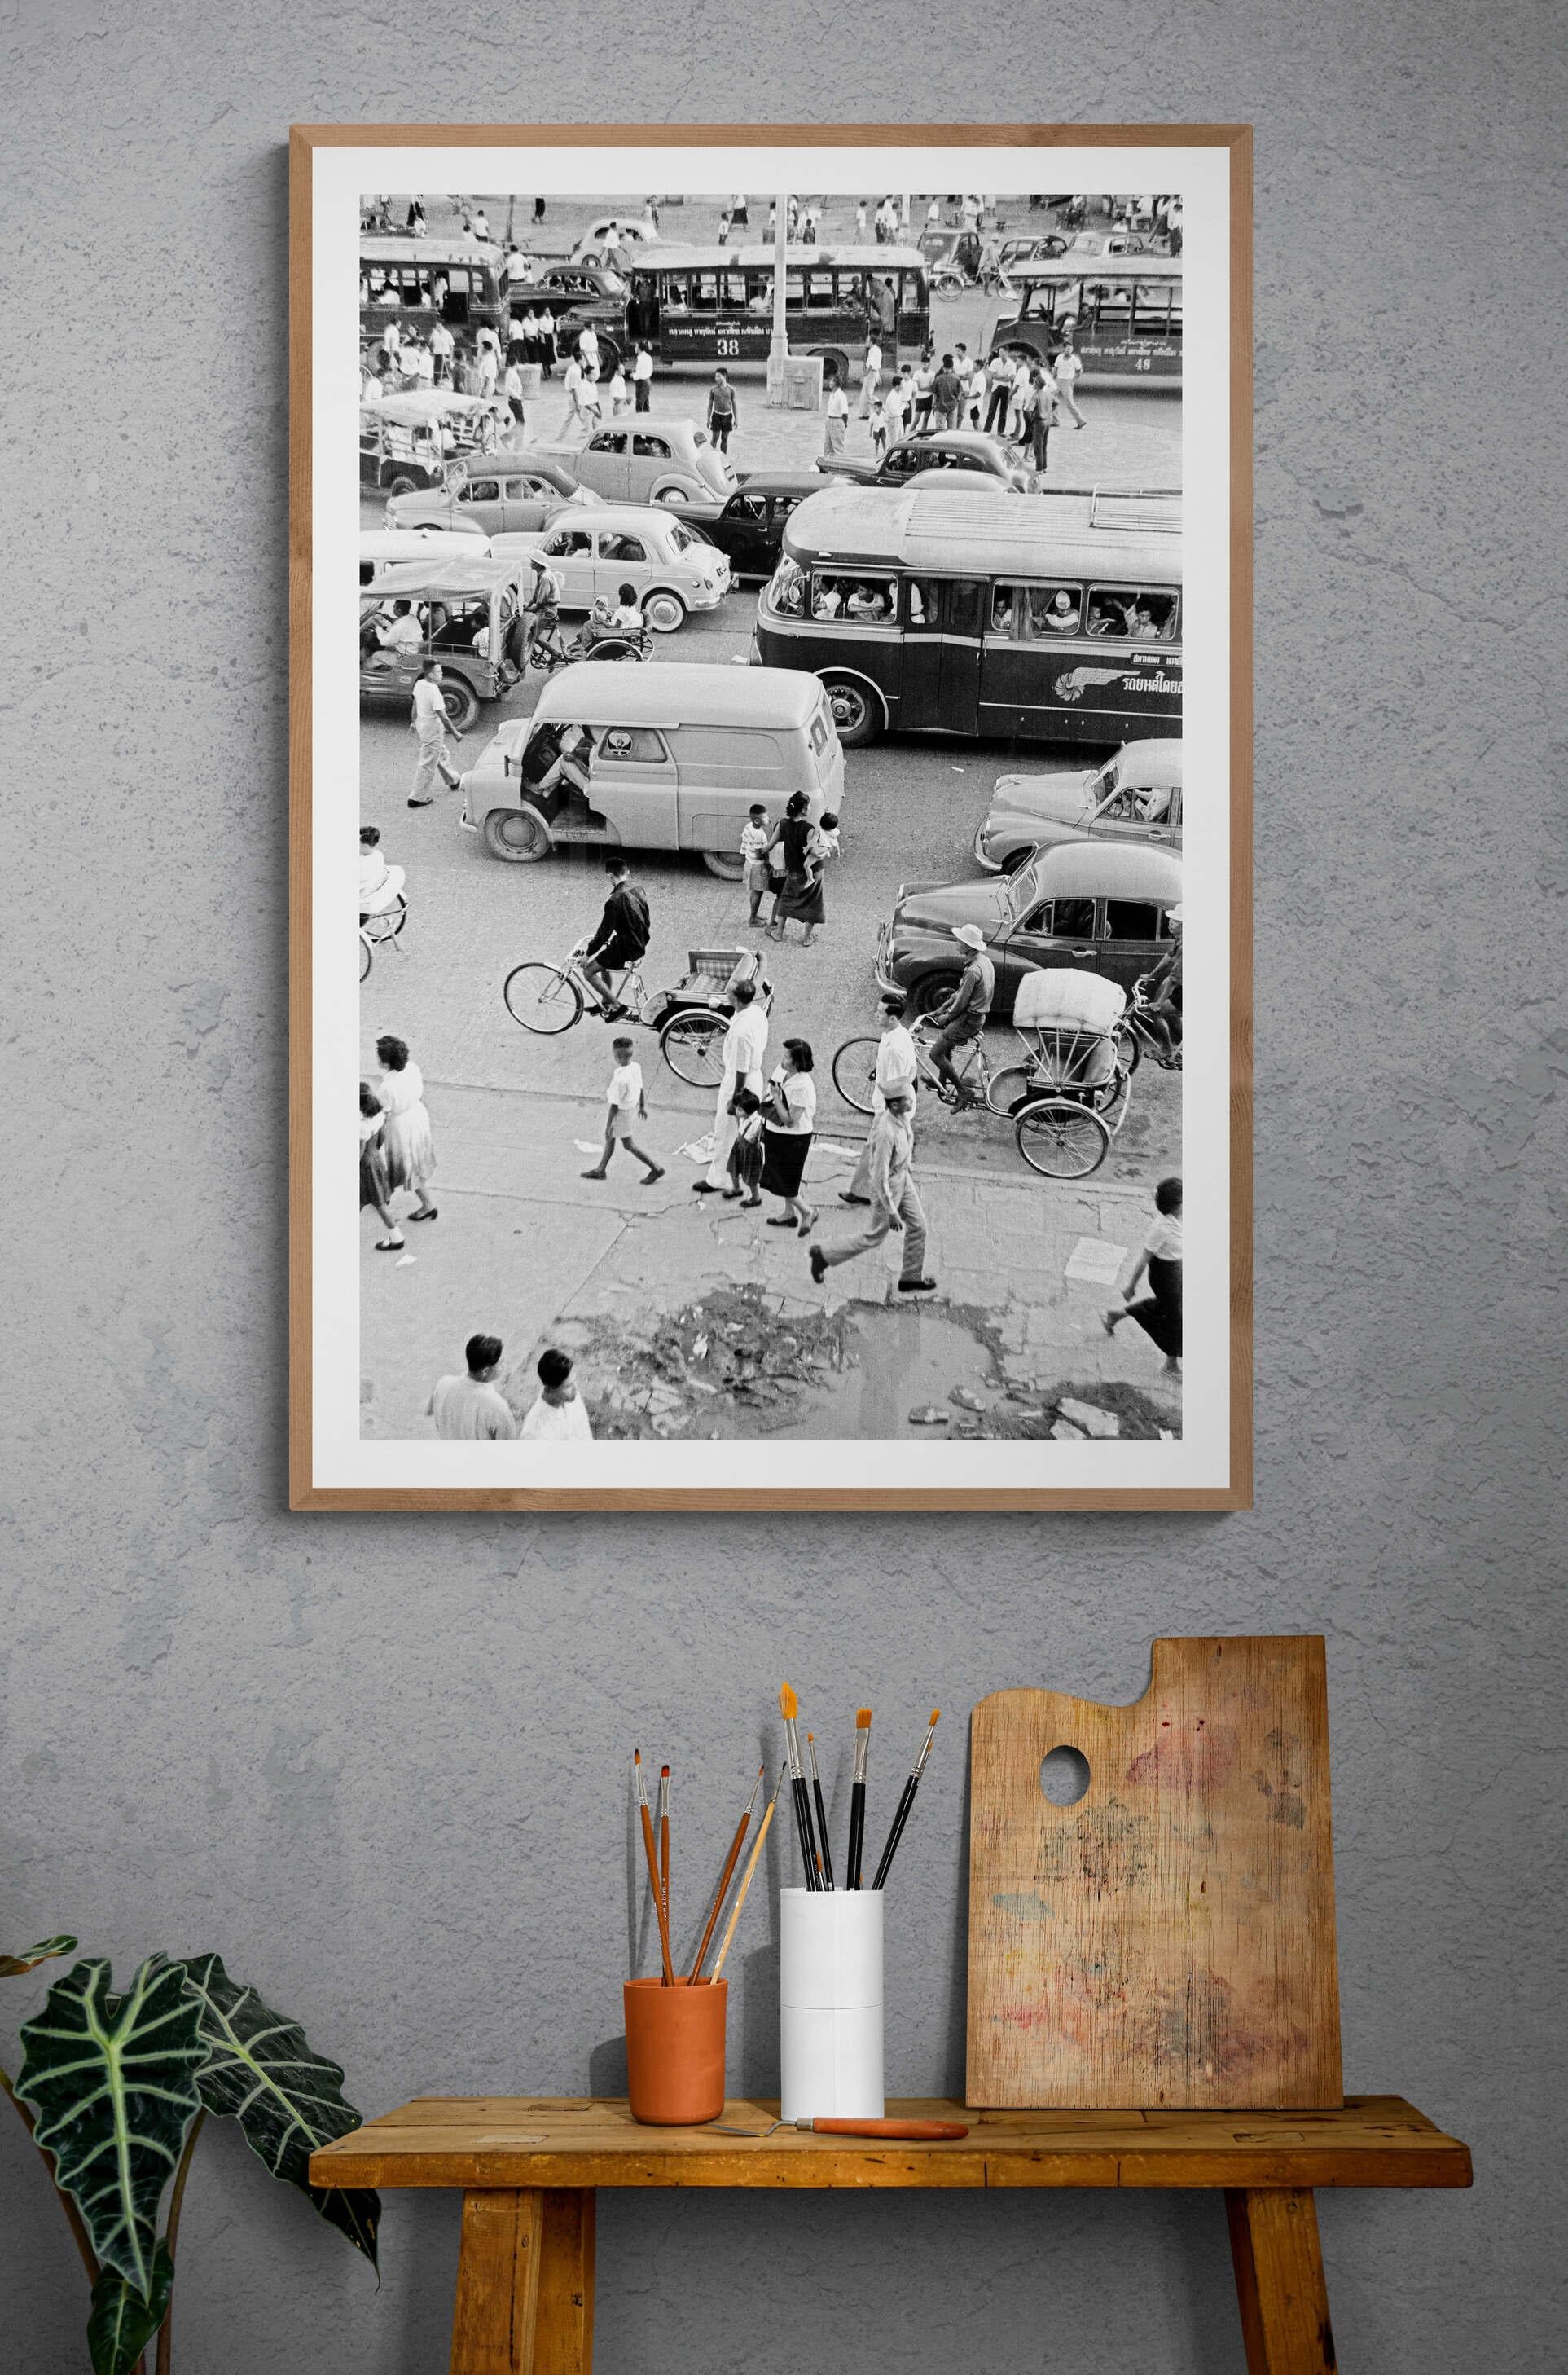 Trafic jam in Bangkok -Thailand 1957 - Large size Black & White Fine Art Print - Photograph by Fabrizio La Torre